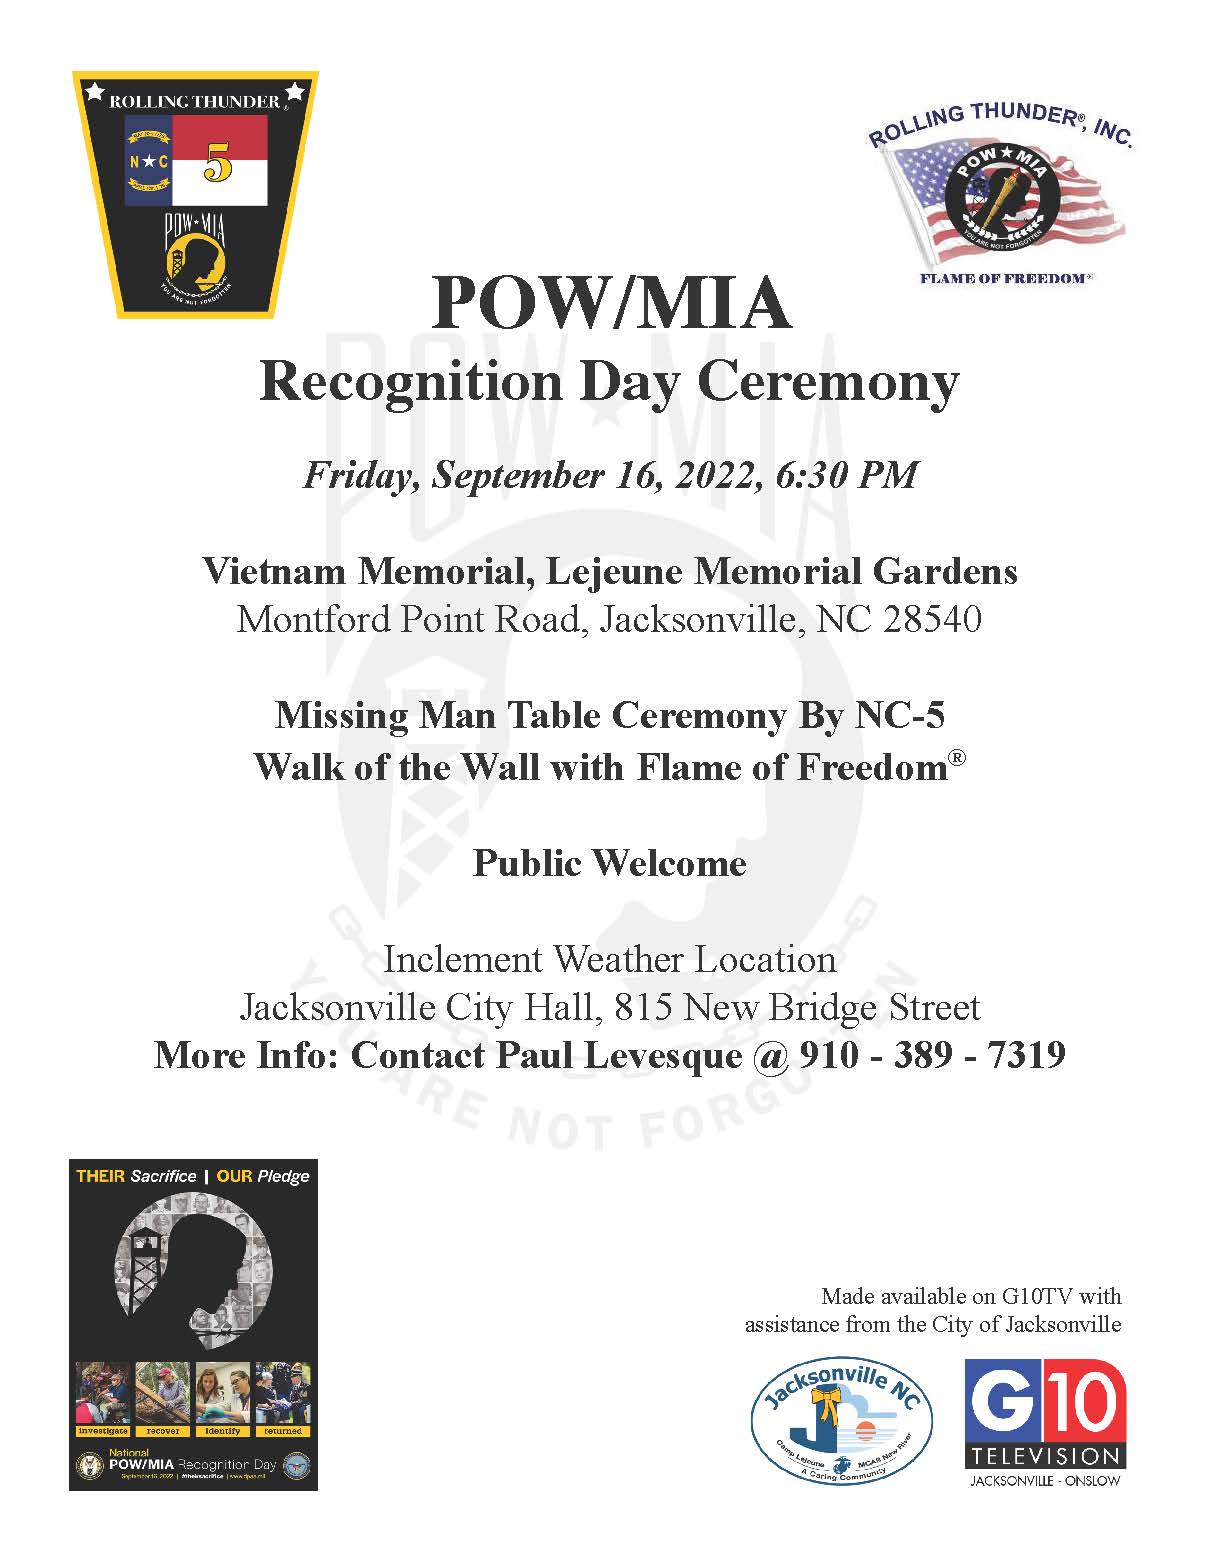 POW/MIA Recognition Day Ceremony@ Vietnam Memorial, Lejeune Memorial Gardens, Jacksonville